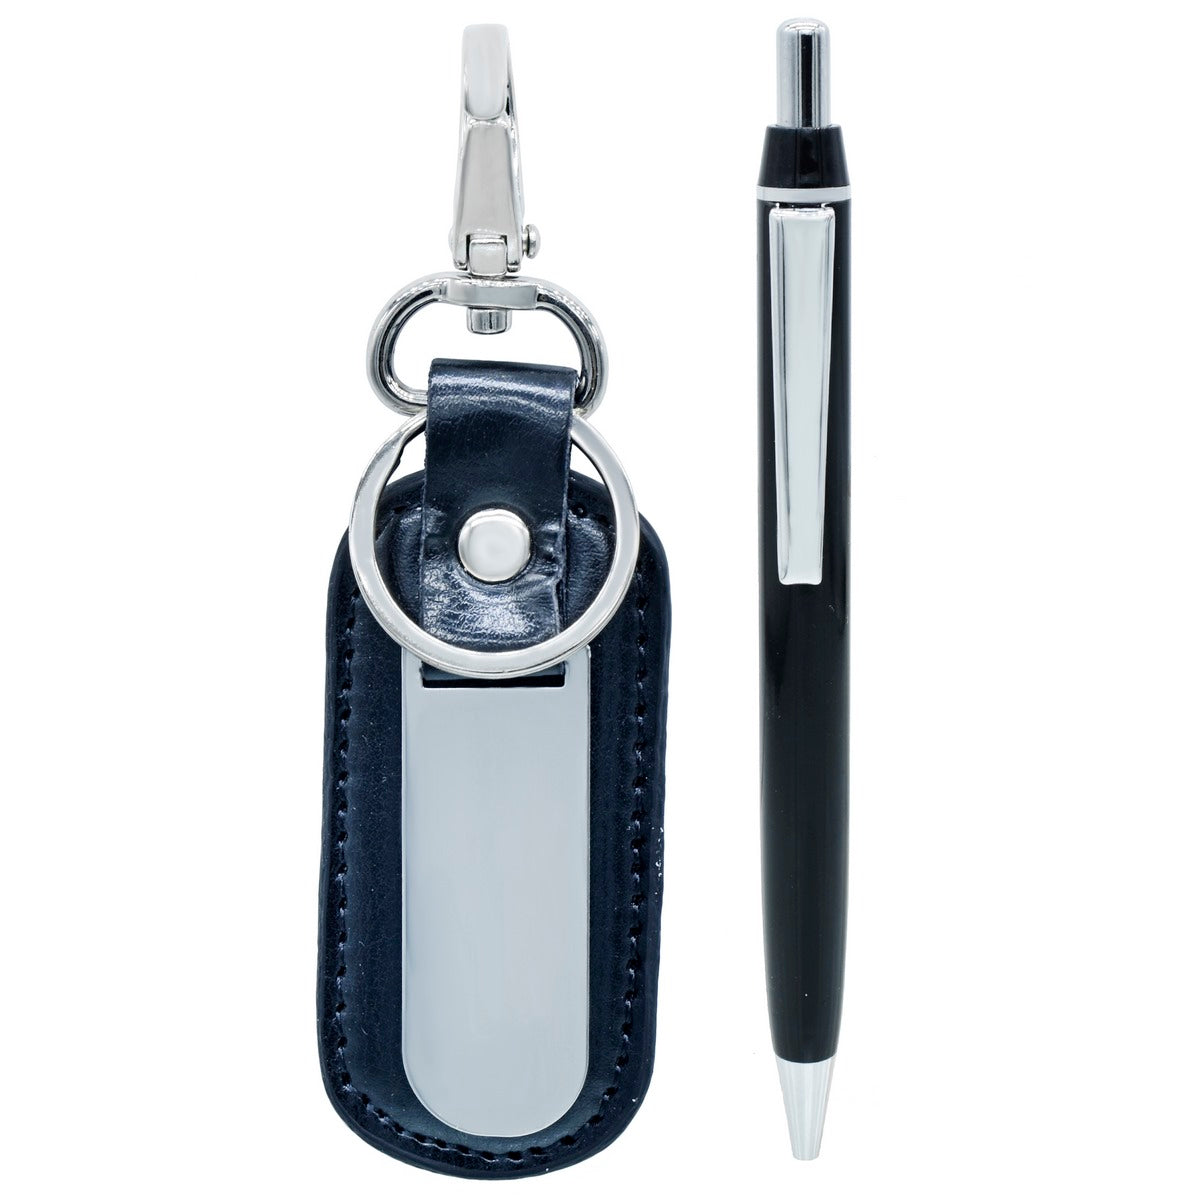 jags-mumbai Pen "Elegant and Versatile: Black Keychain with Pen Gift Set (SET118BK)"